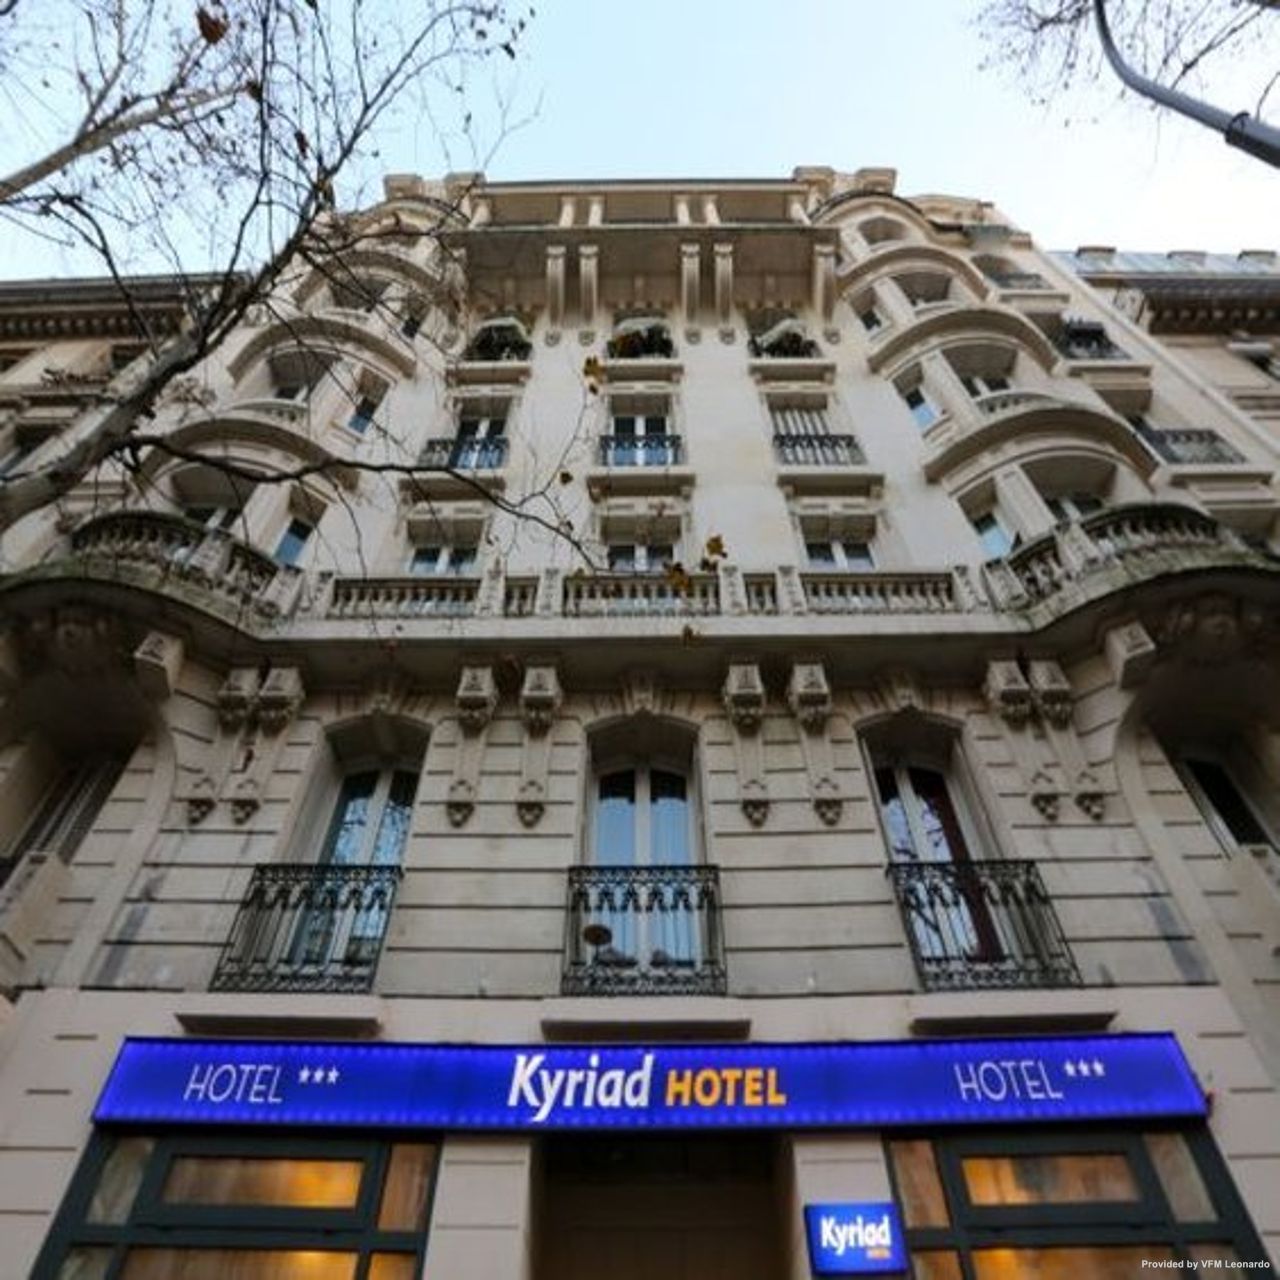 Hotel Kyriad Paris 18 - Porte de Clignancourt - Montmartre - HOTEL INFO